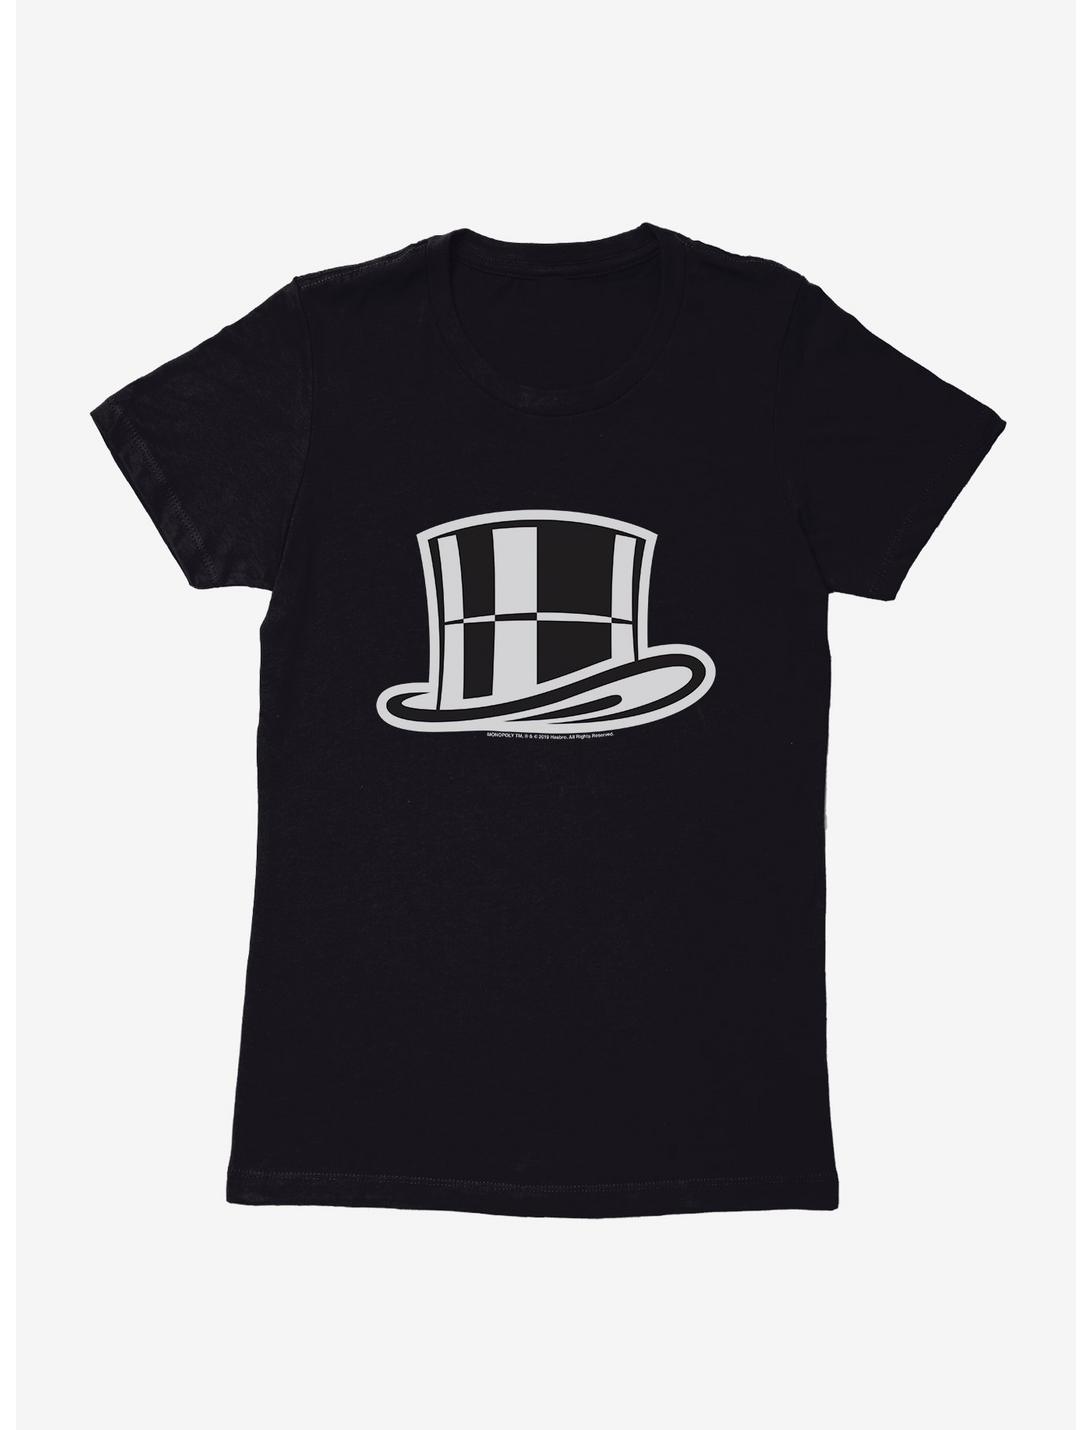 Monopoly Top Hat Graphic Womens T-Shirt, BLACK, hi-res